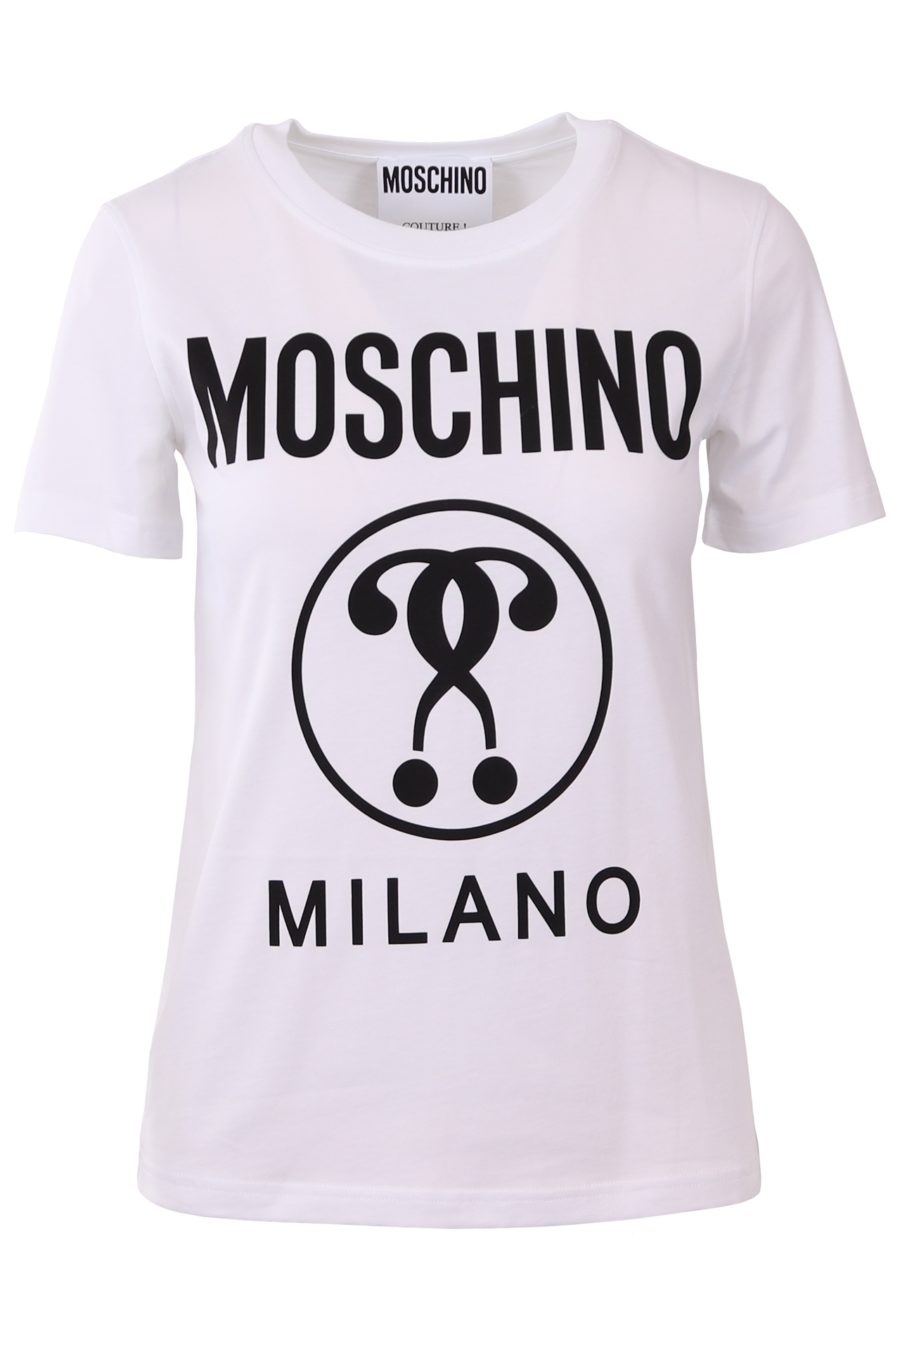 Moschino Couture weißes T-Shirt mit großem Mailänder Logo - 418b69f3fb0dcc55103232d181eaf5120709cdee3a